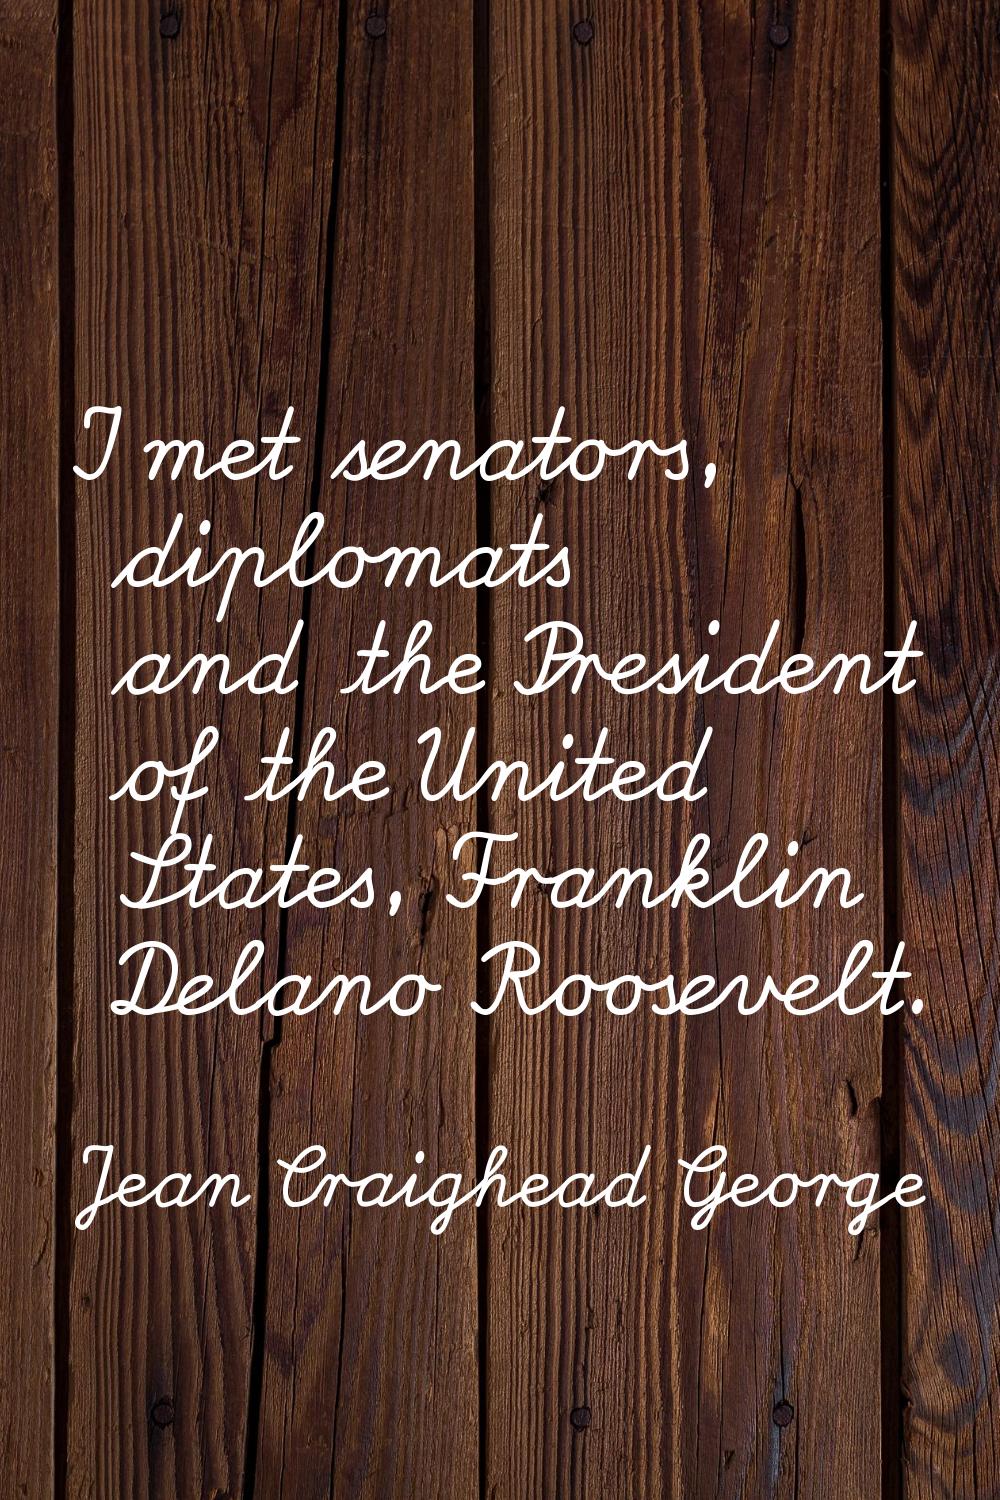 I met senators, diplomats and the President of the United States, Franklin Delano Roosevelt.